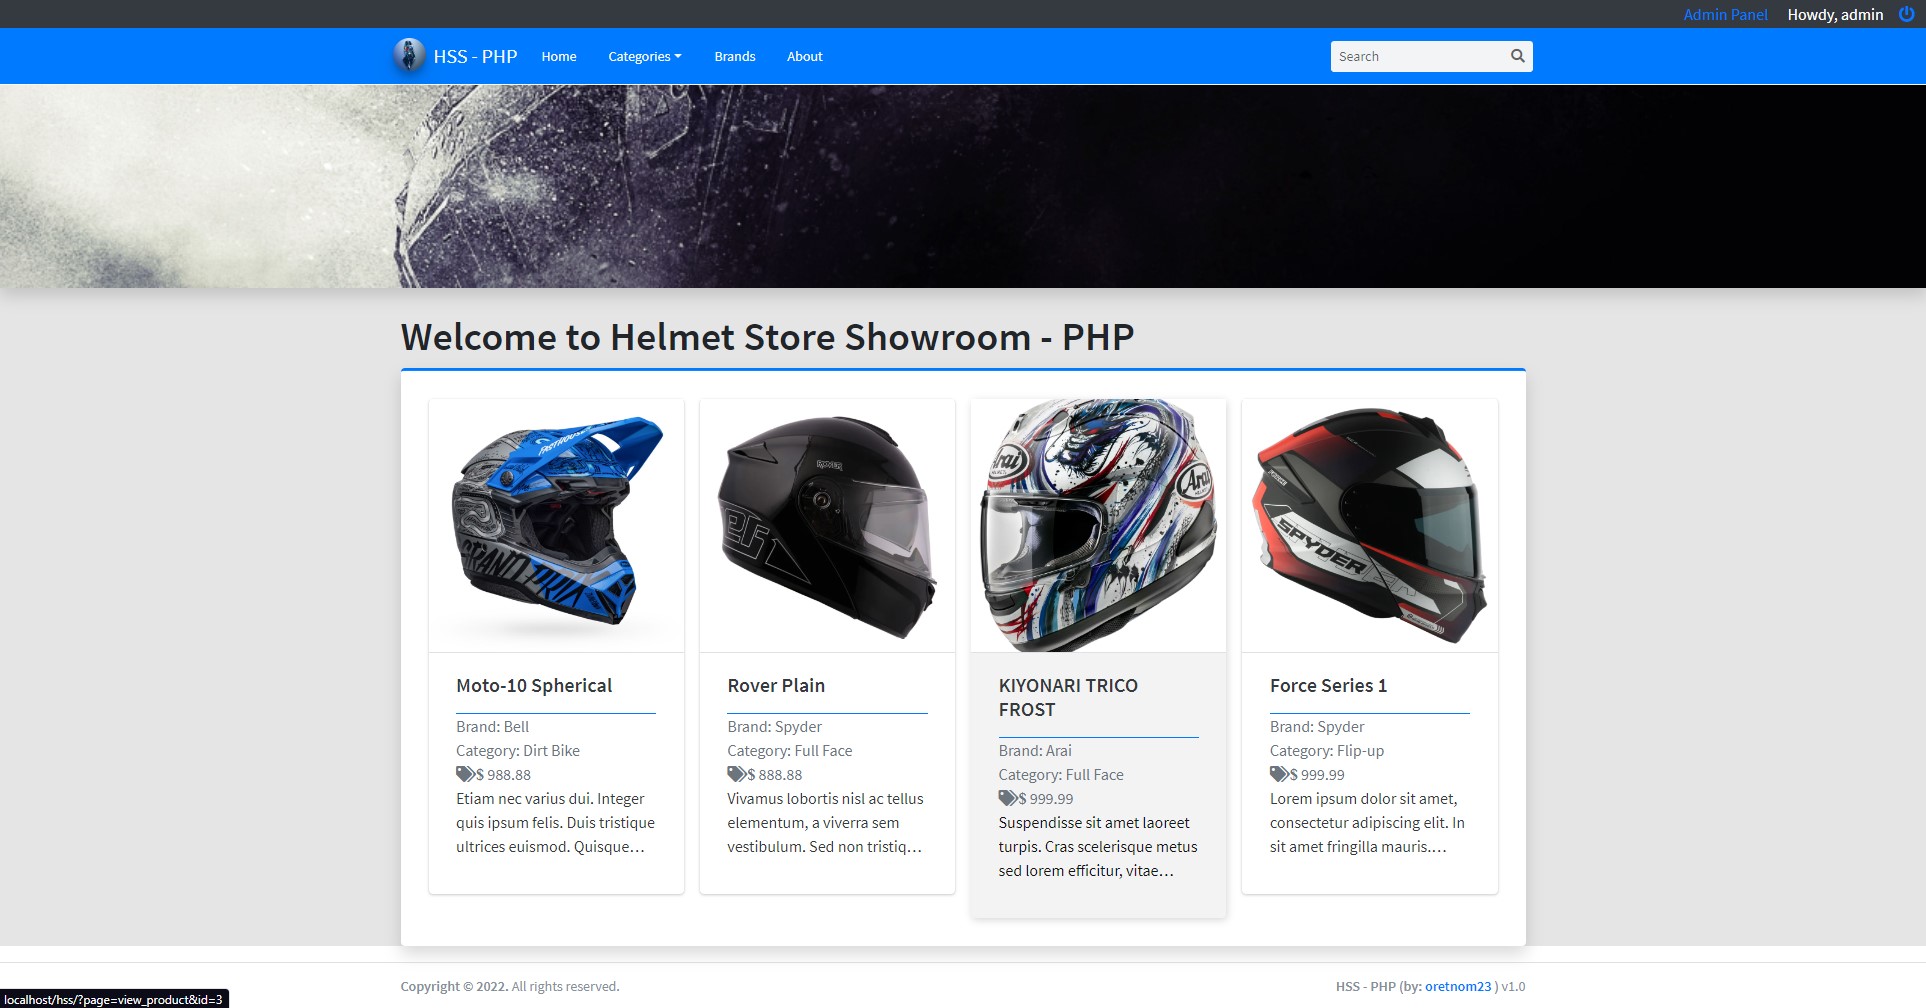 Helmet Store's Showroom Site - Public Home Page